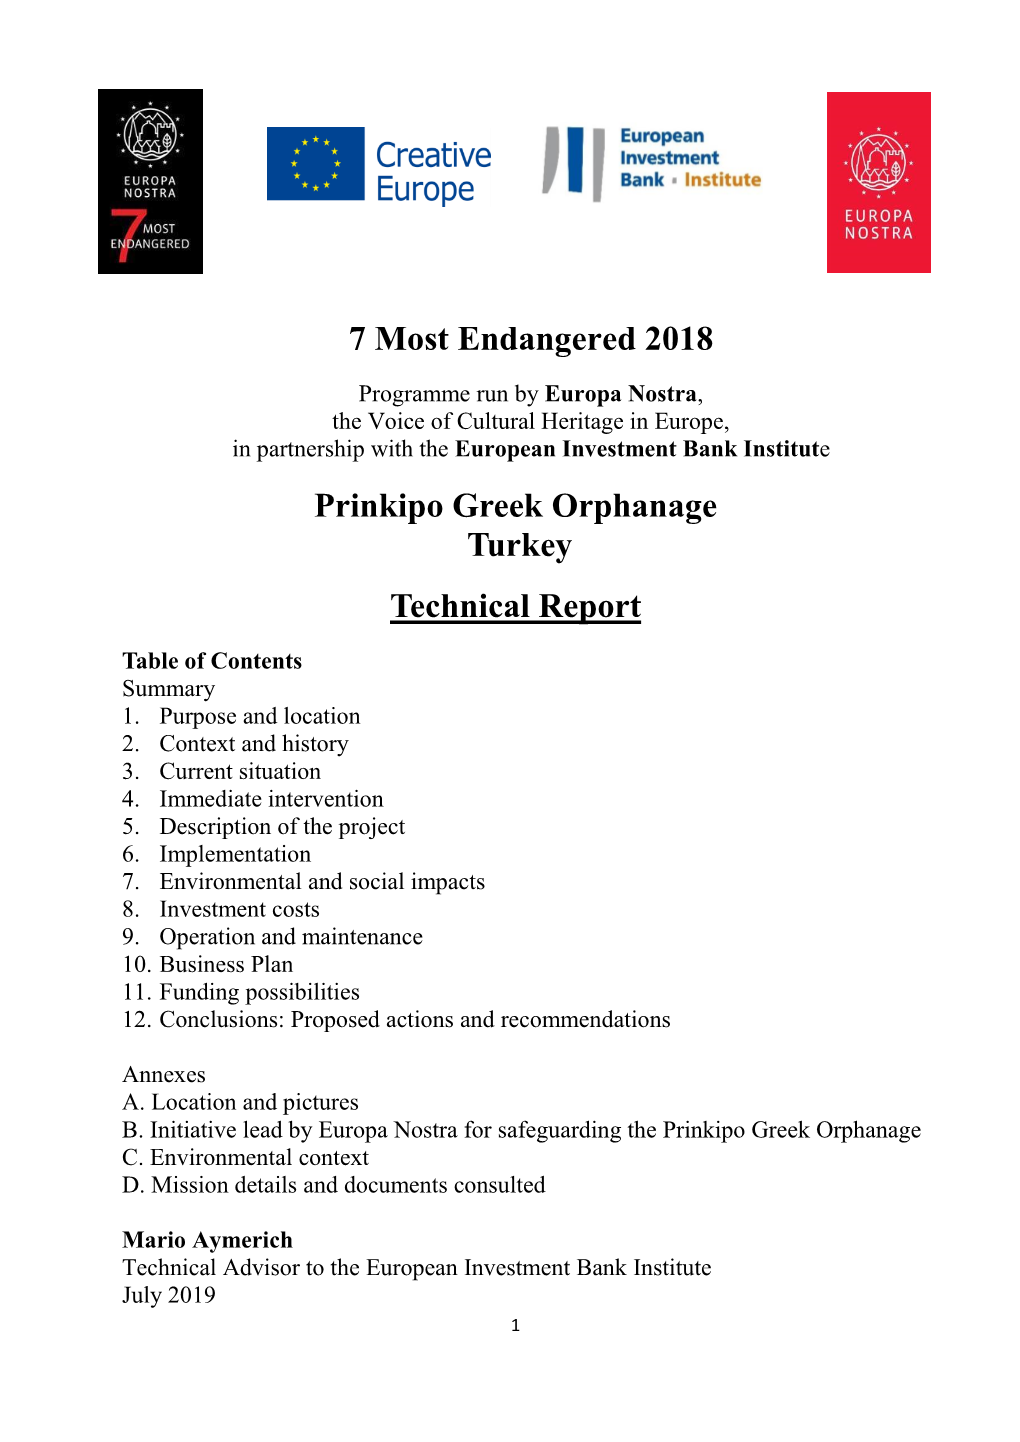 Prinkipo Greek Orphanage Turkey Technical Report